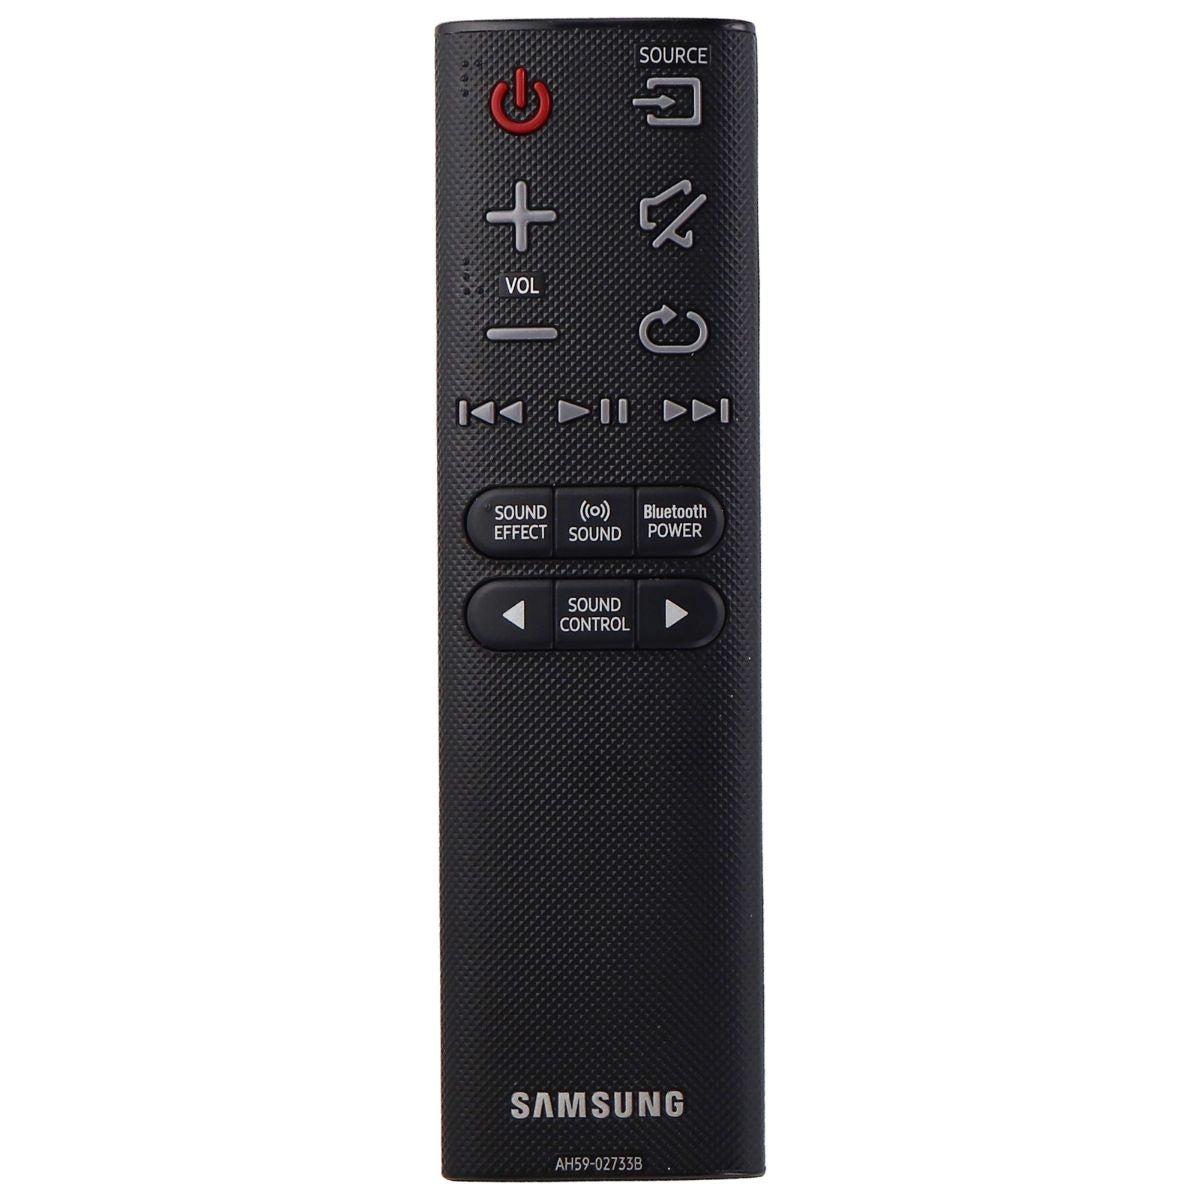 Samsung Remote Control (AH59-02733B) for Select Samsung Soundbars - Black TV, Video & Audio Accessories - Remote Controls Samsung    - Simple Cell Bulk Wholesale Pricing - USA Seller